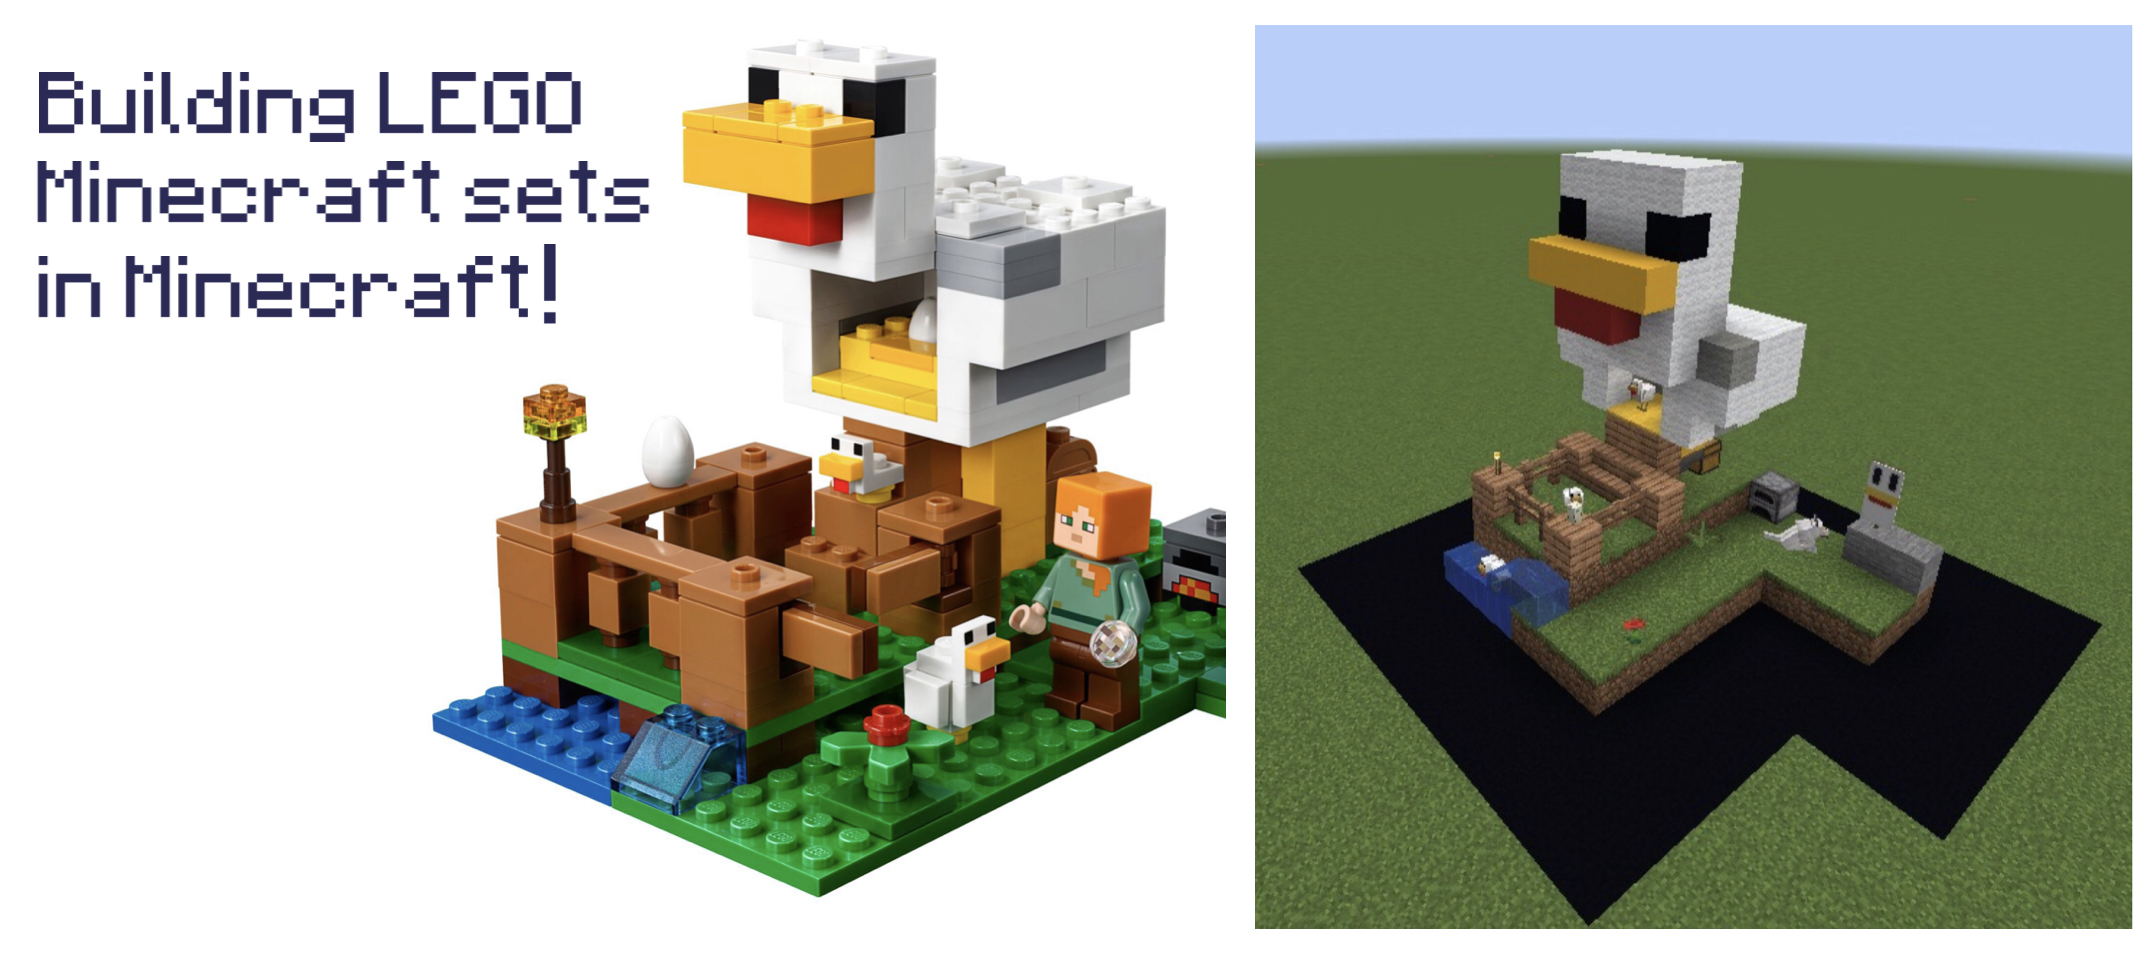 Building LEGO Sets Minecraft